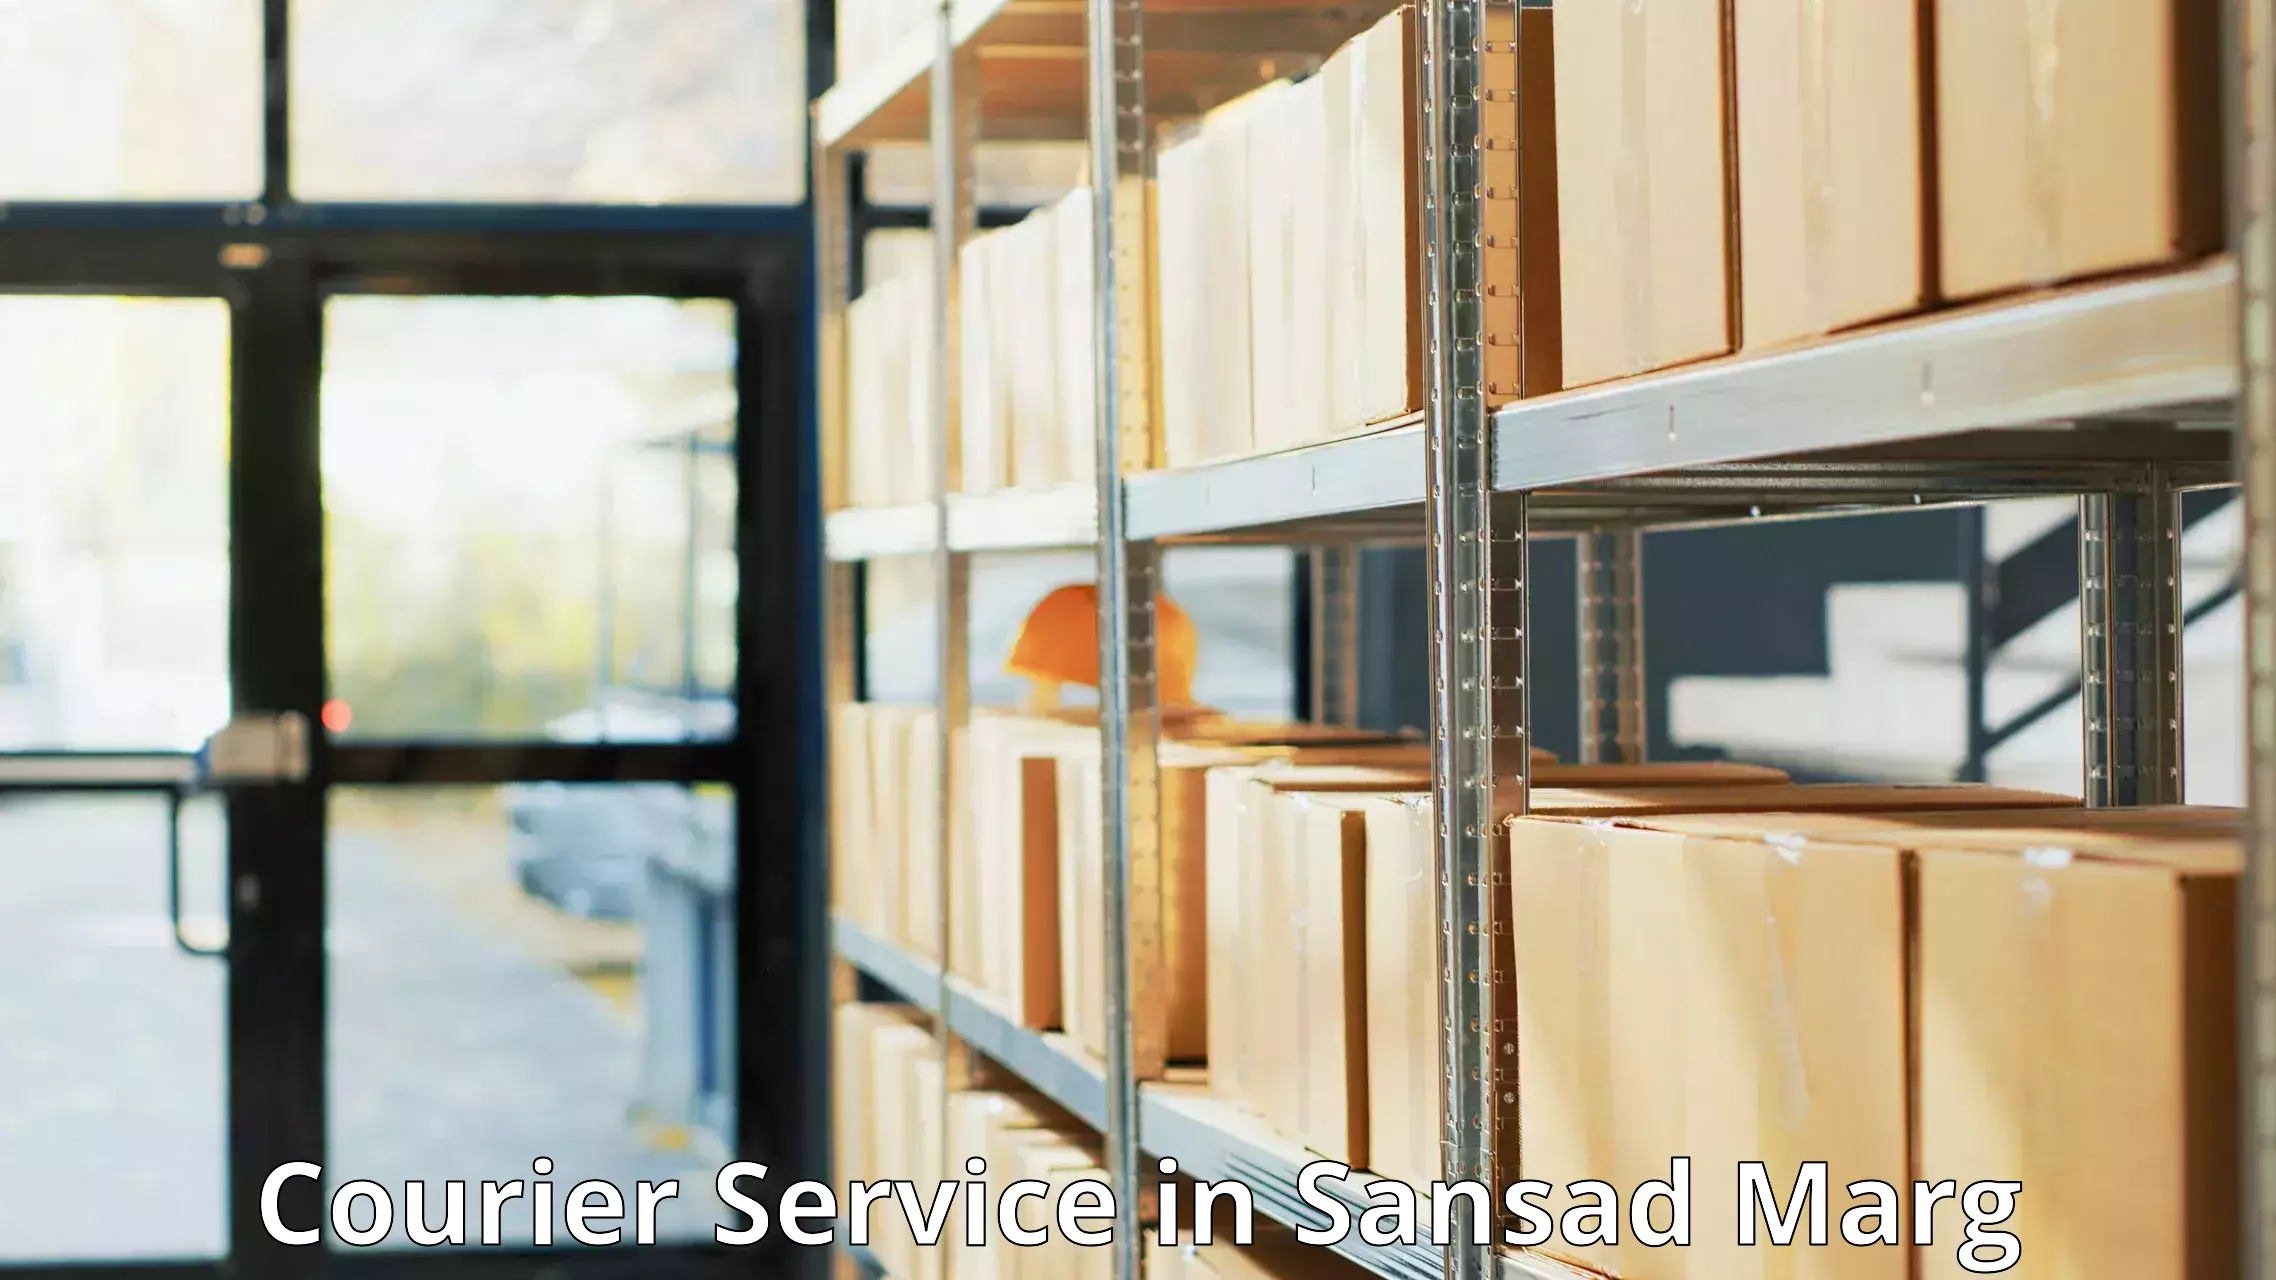 Nationwide delivery network in Sansad Marg